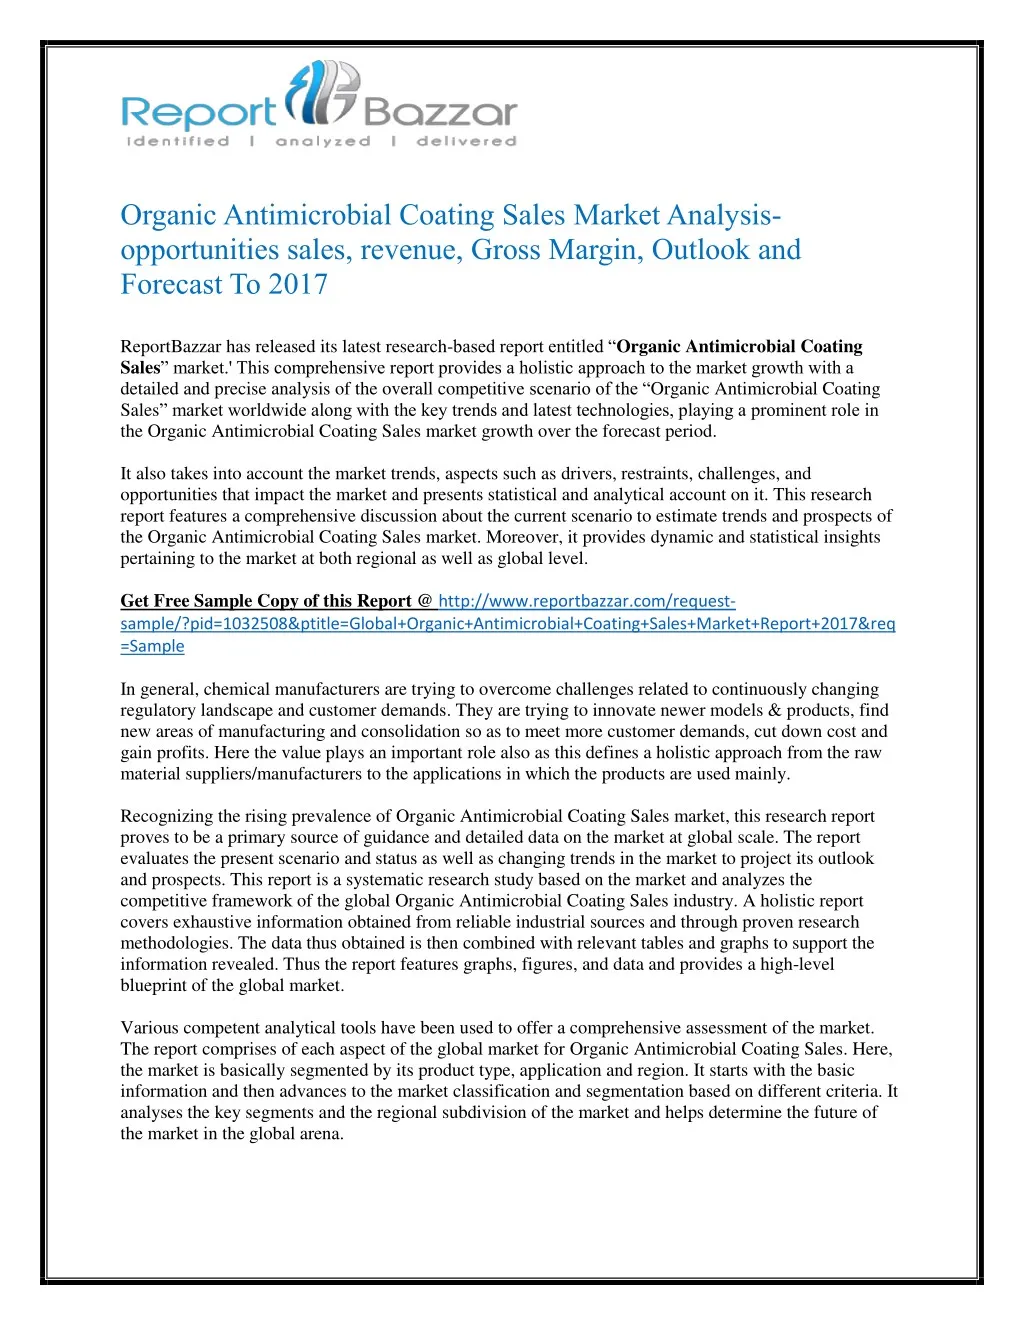 organic antimicrobial coating sales market